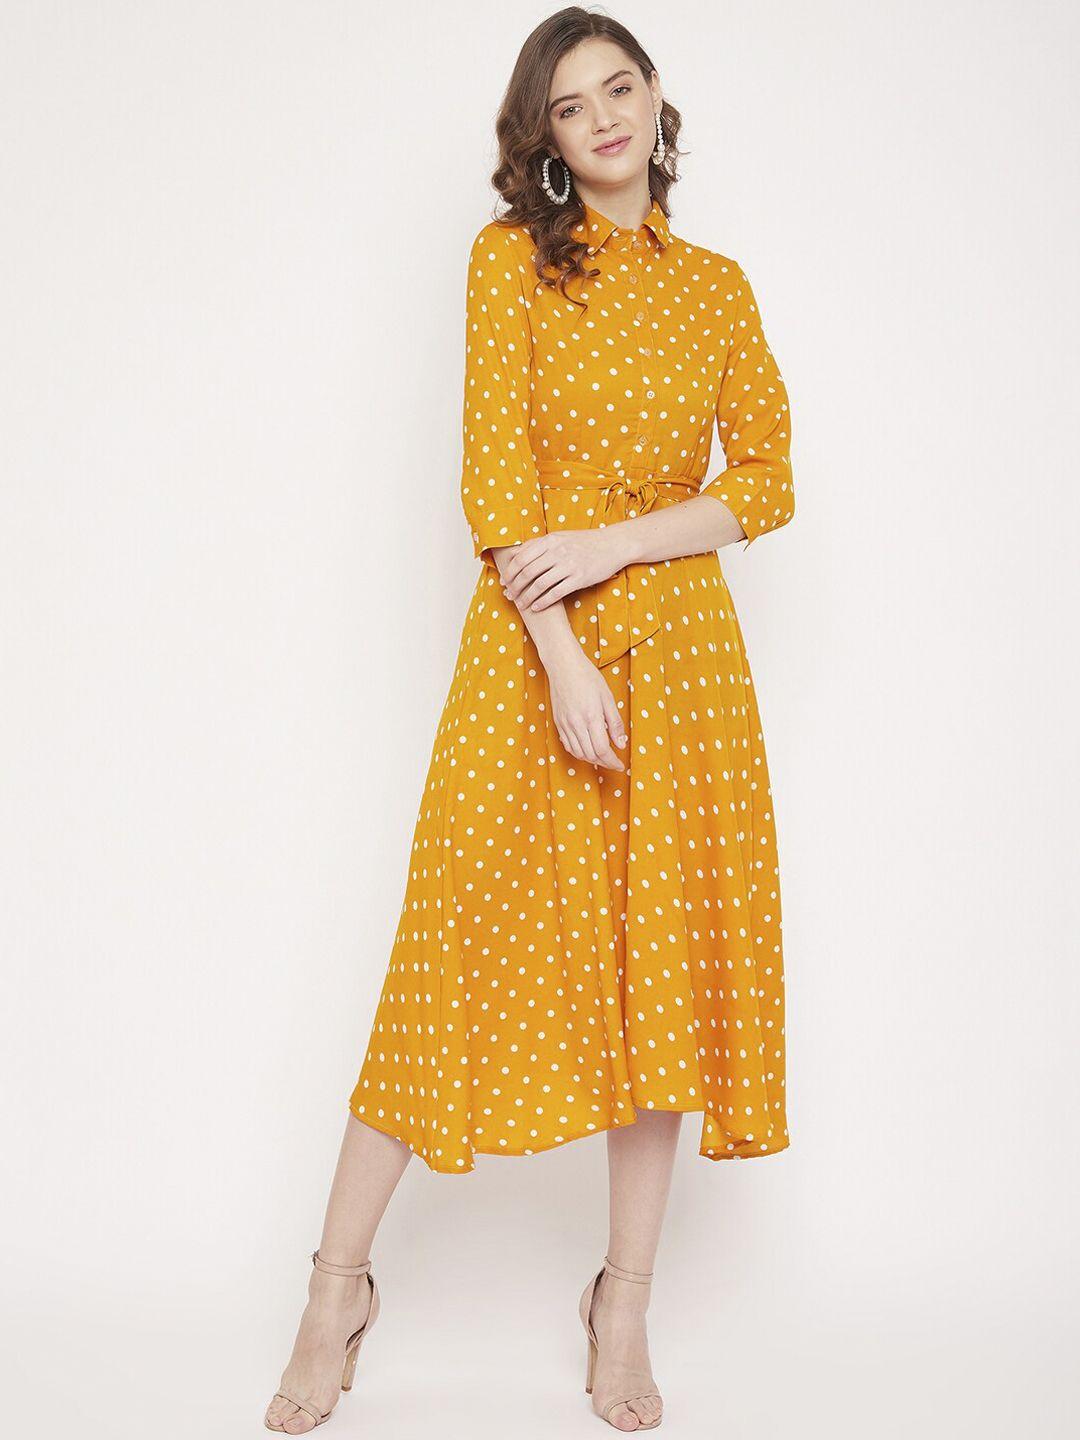 panit mustard yellow crepe shirt maxi dress